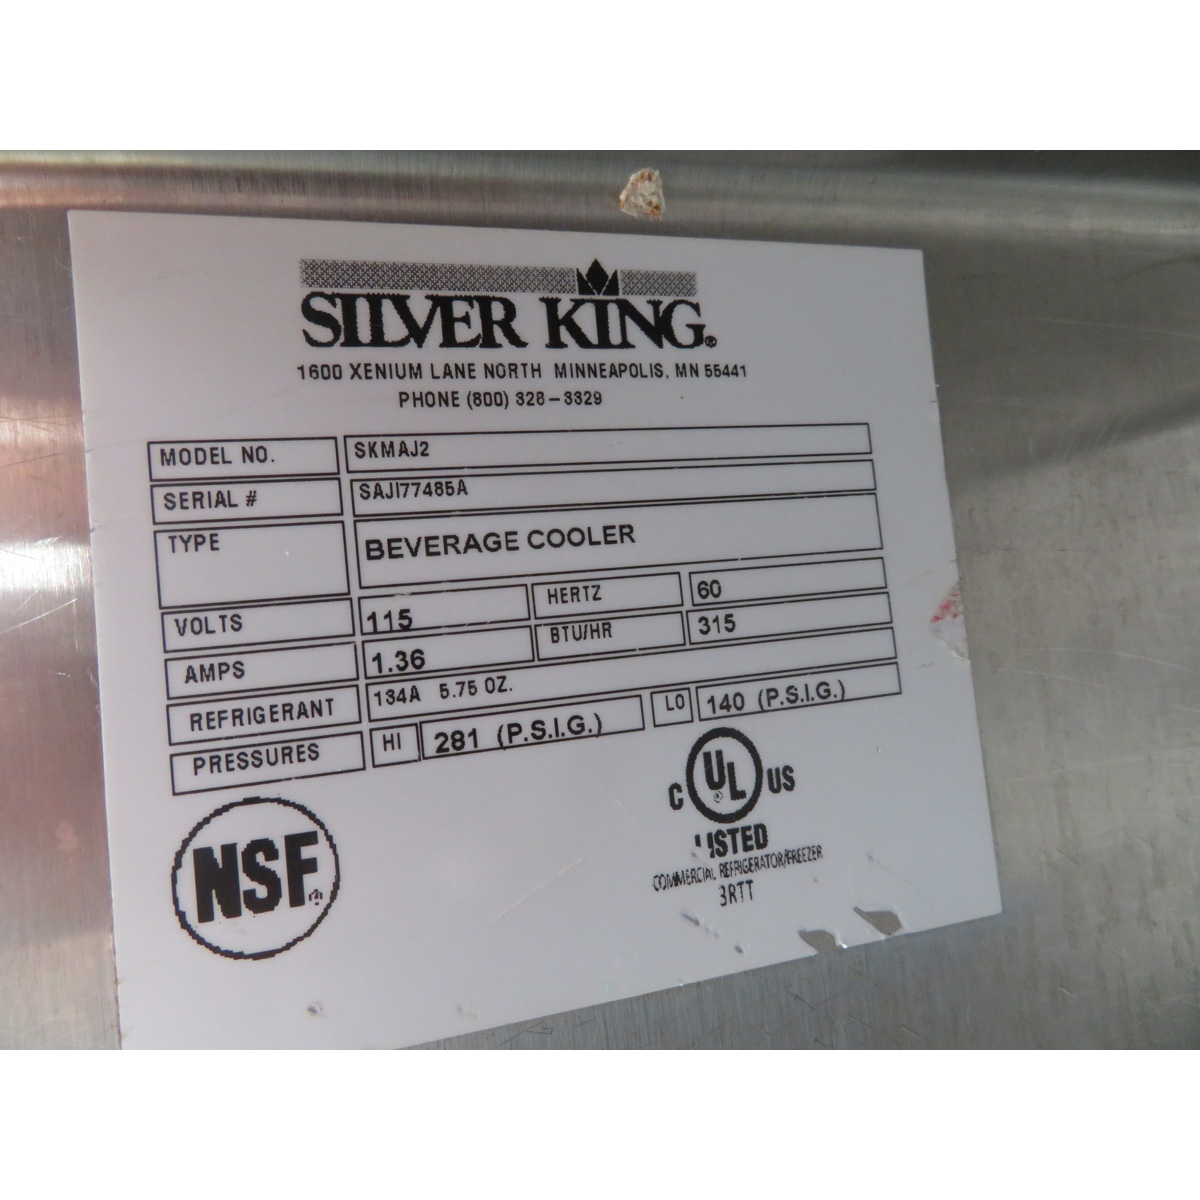 Silver King SKMAJ2 Milk Dispenser 2 Head, Used Very Good Condition image 3